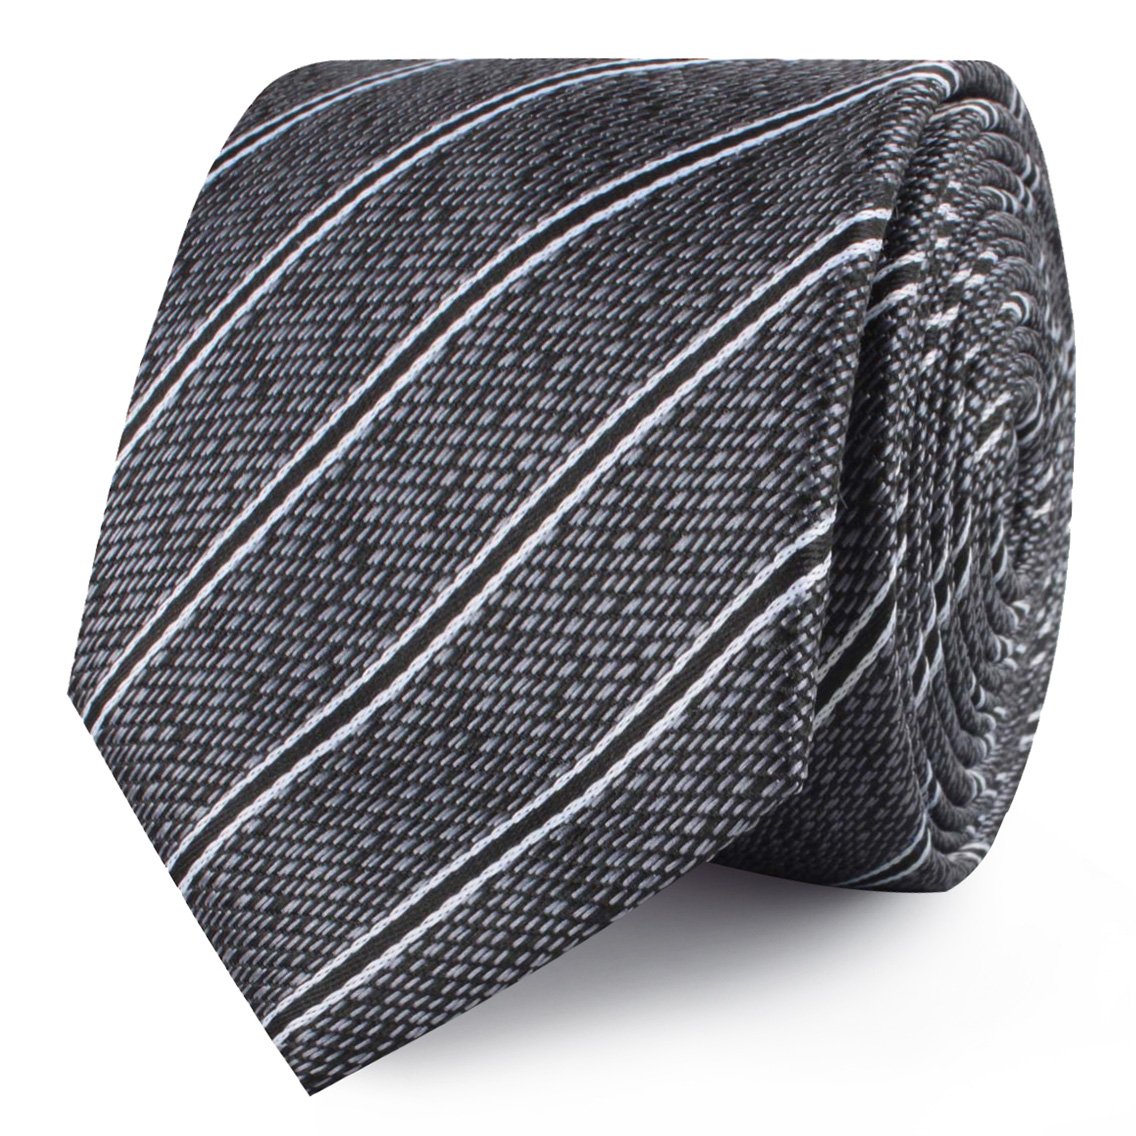 New York Charcoal Striped Skinny Ties